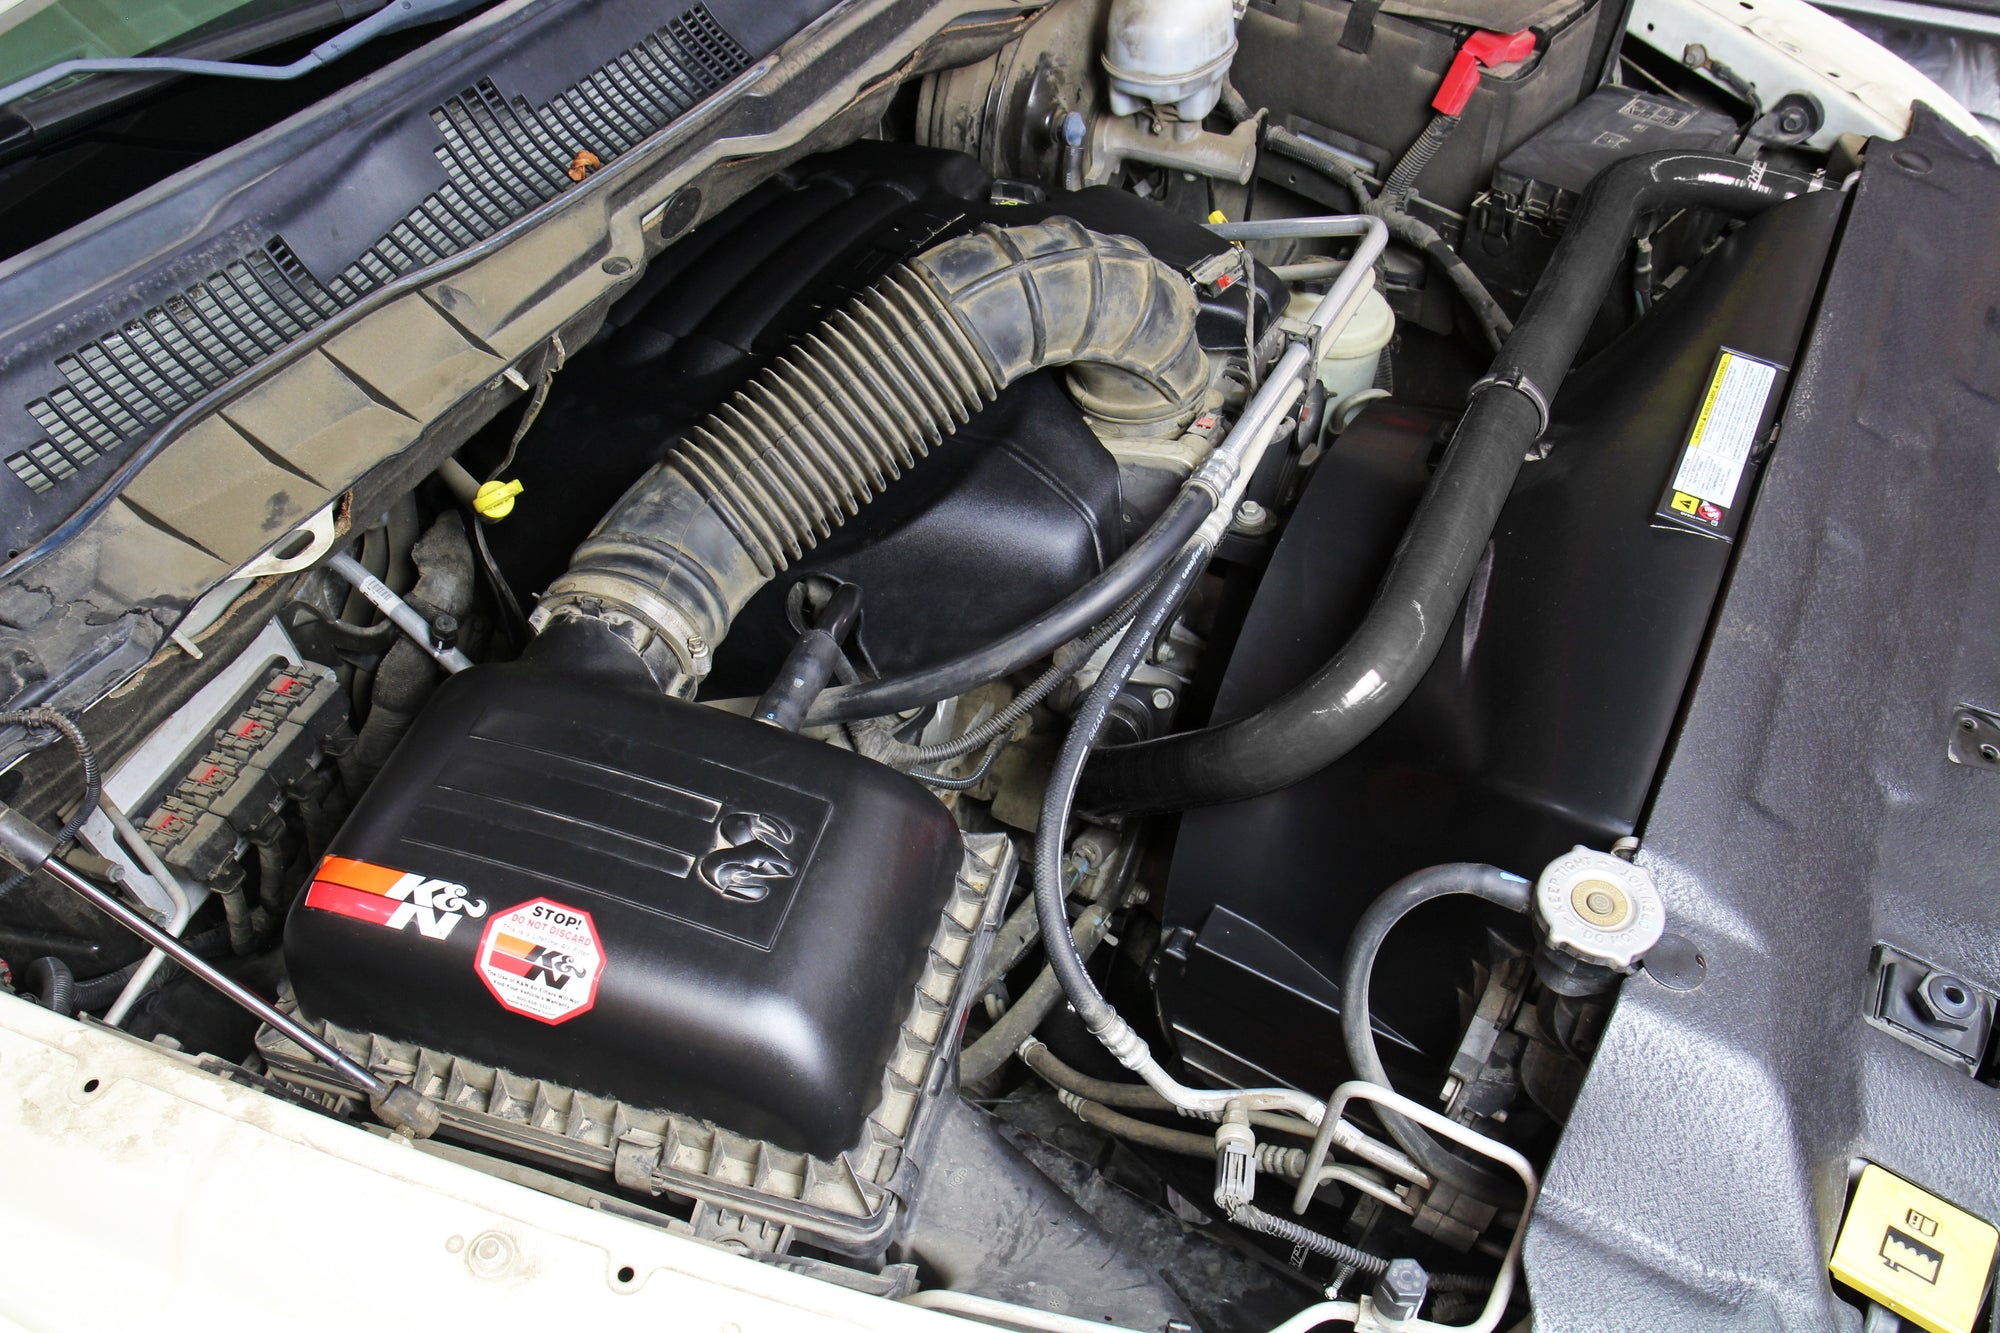 HPS Black Silicone Radiator Hose Kit 57-1818 replace upper and lower coolant hoses OE 55056772AB, 55056771AB on Dodge 2009-2019 Ram 1500 Pickup 5.7L V8 